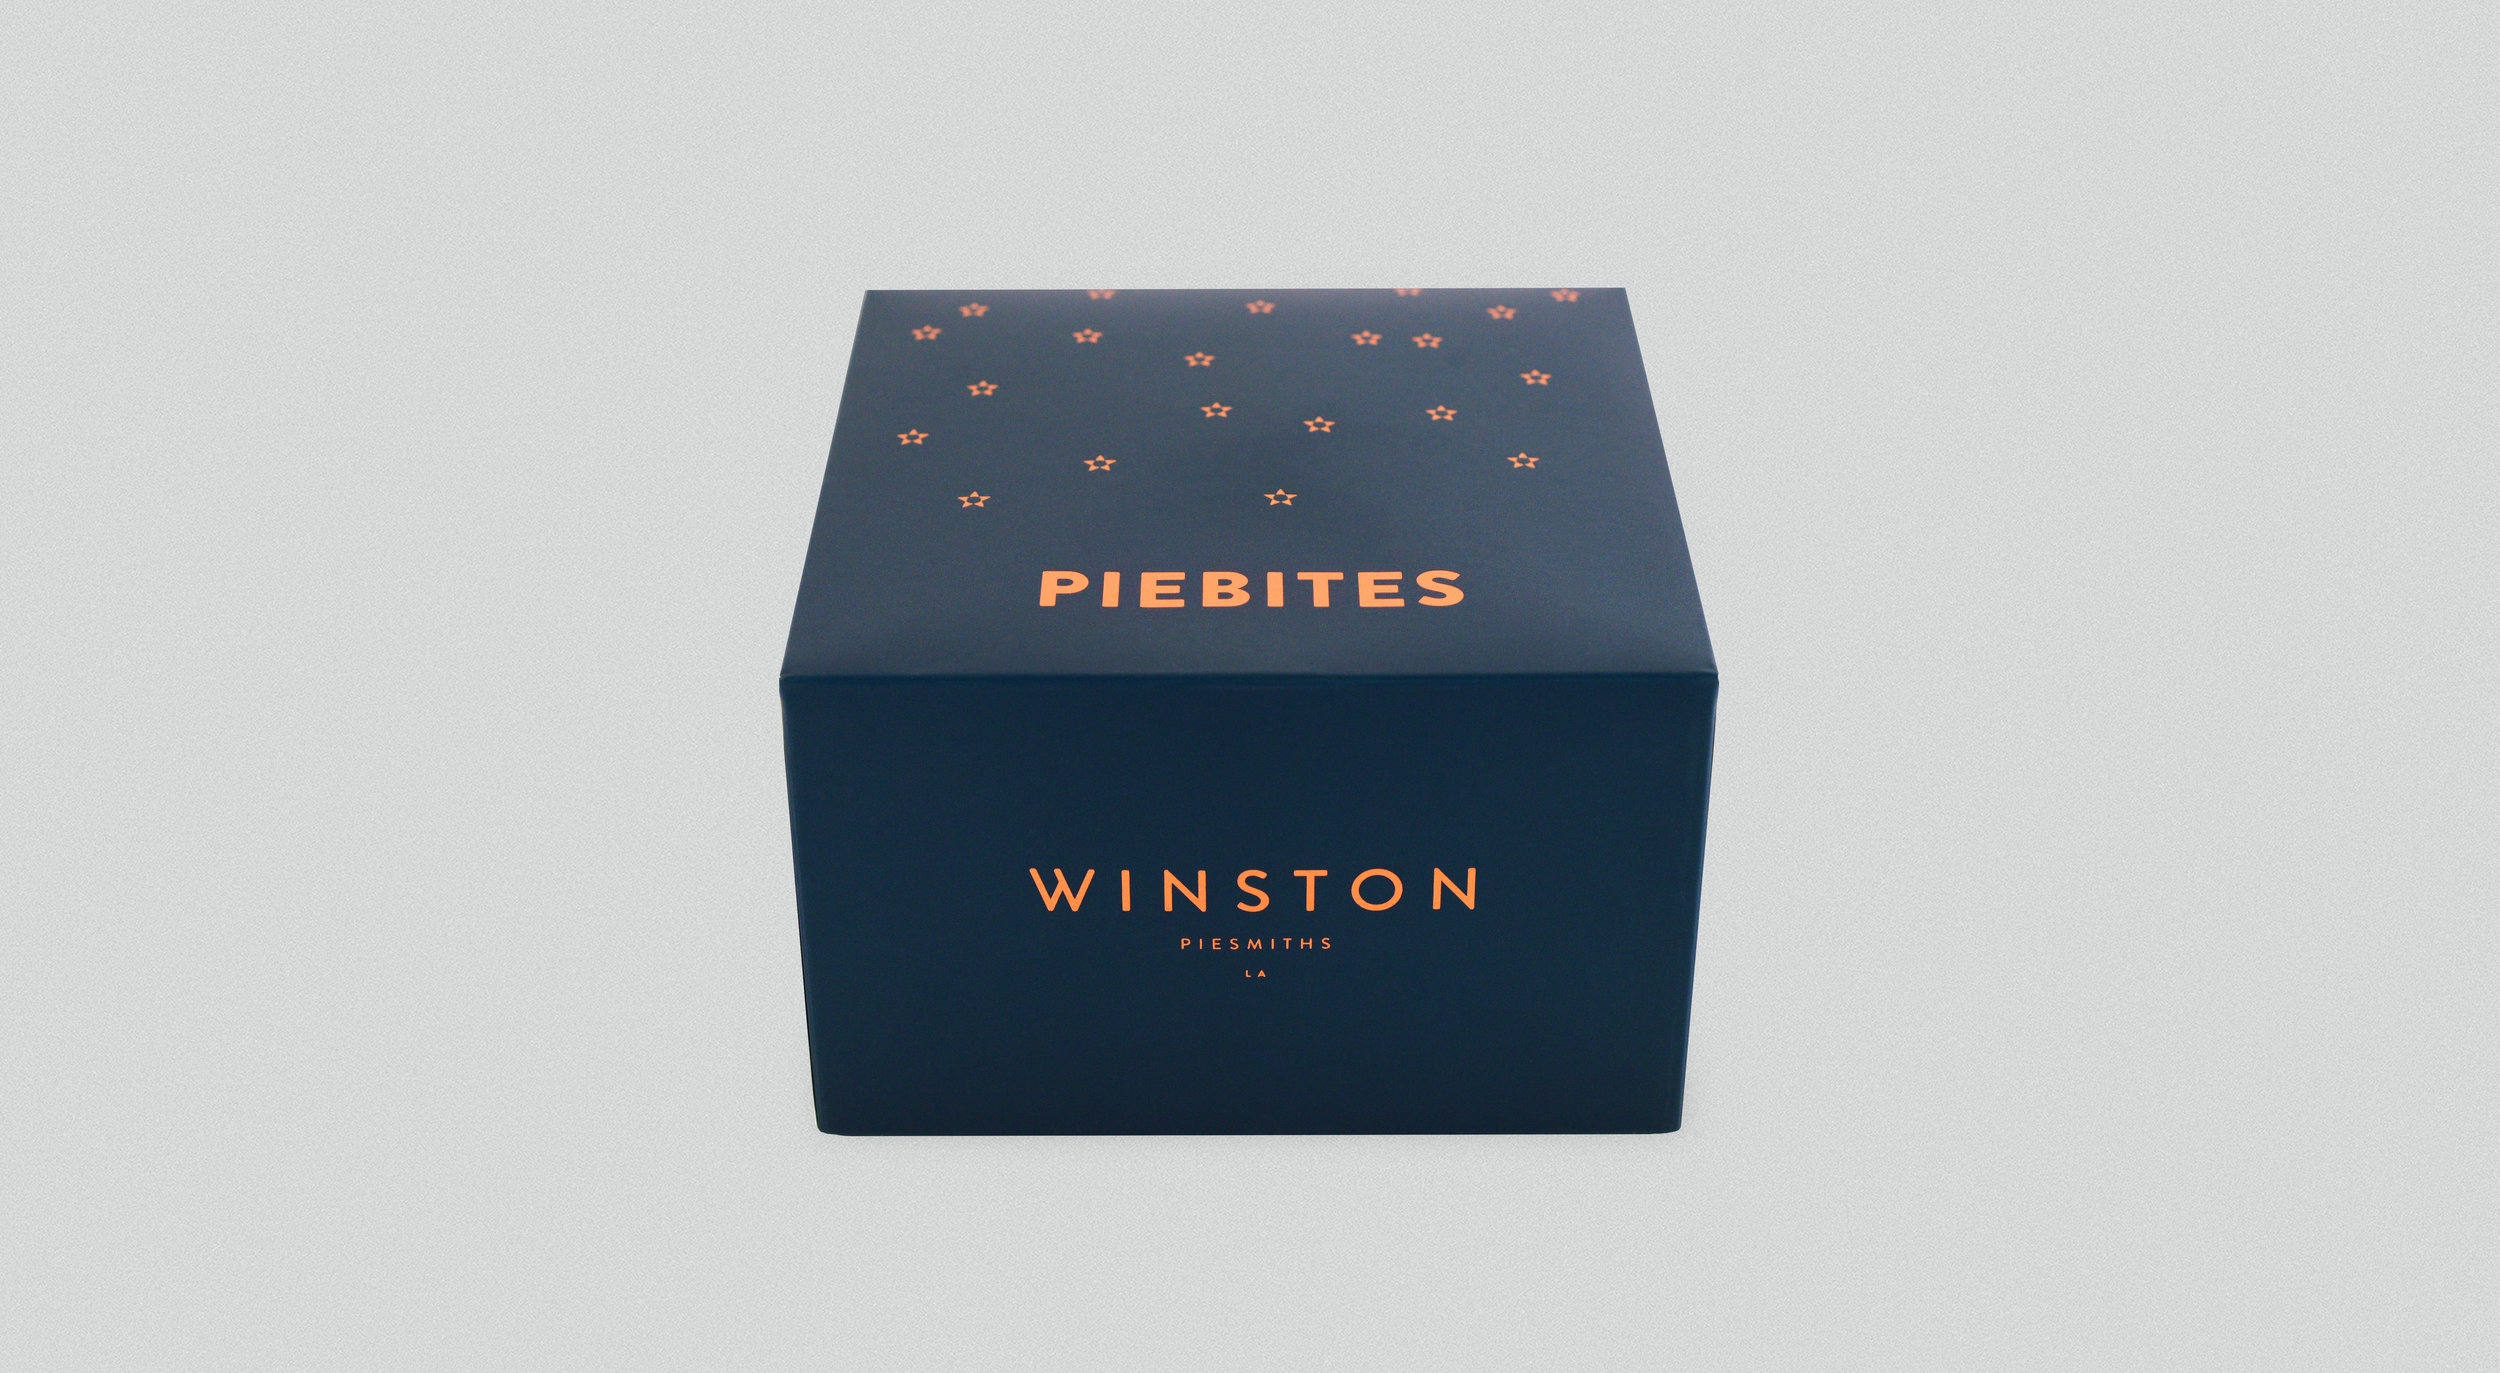 Winston Pies blue piebites box